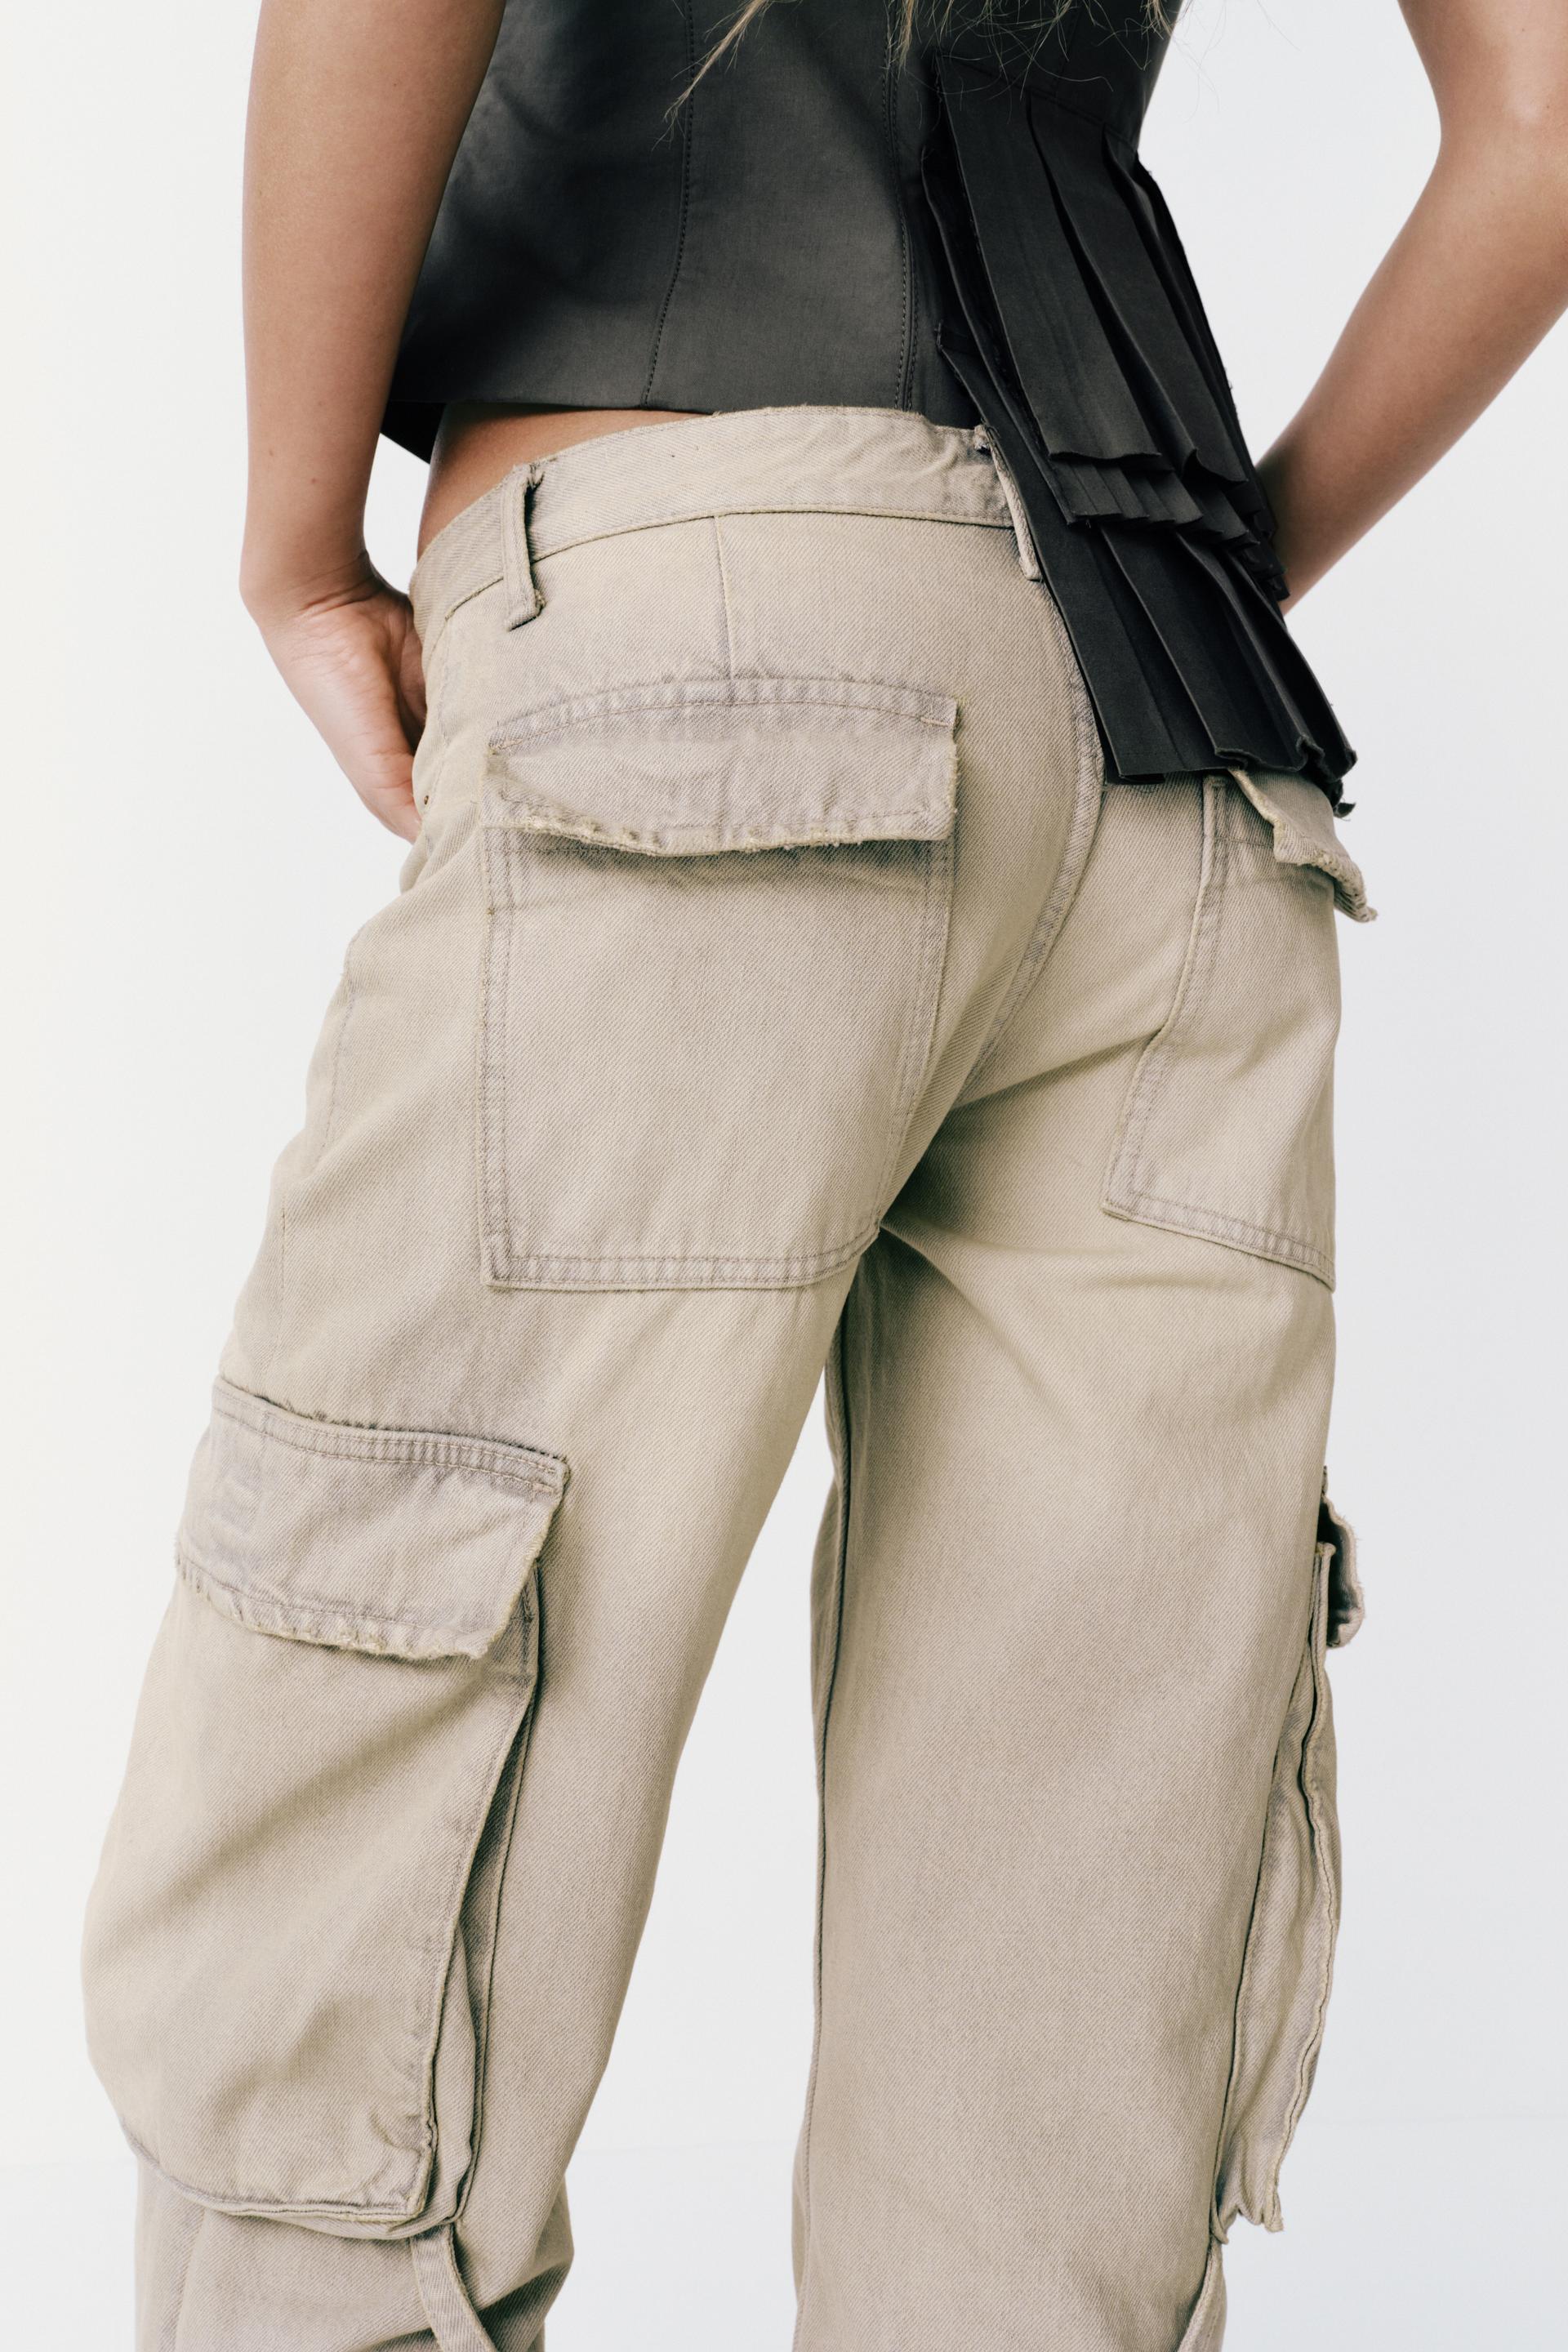 Zara womens cargo pants - Gem